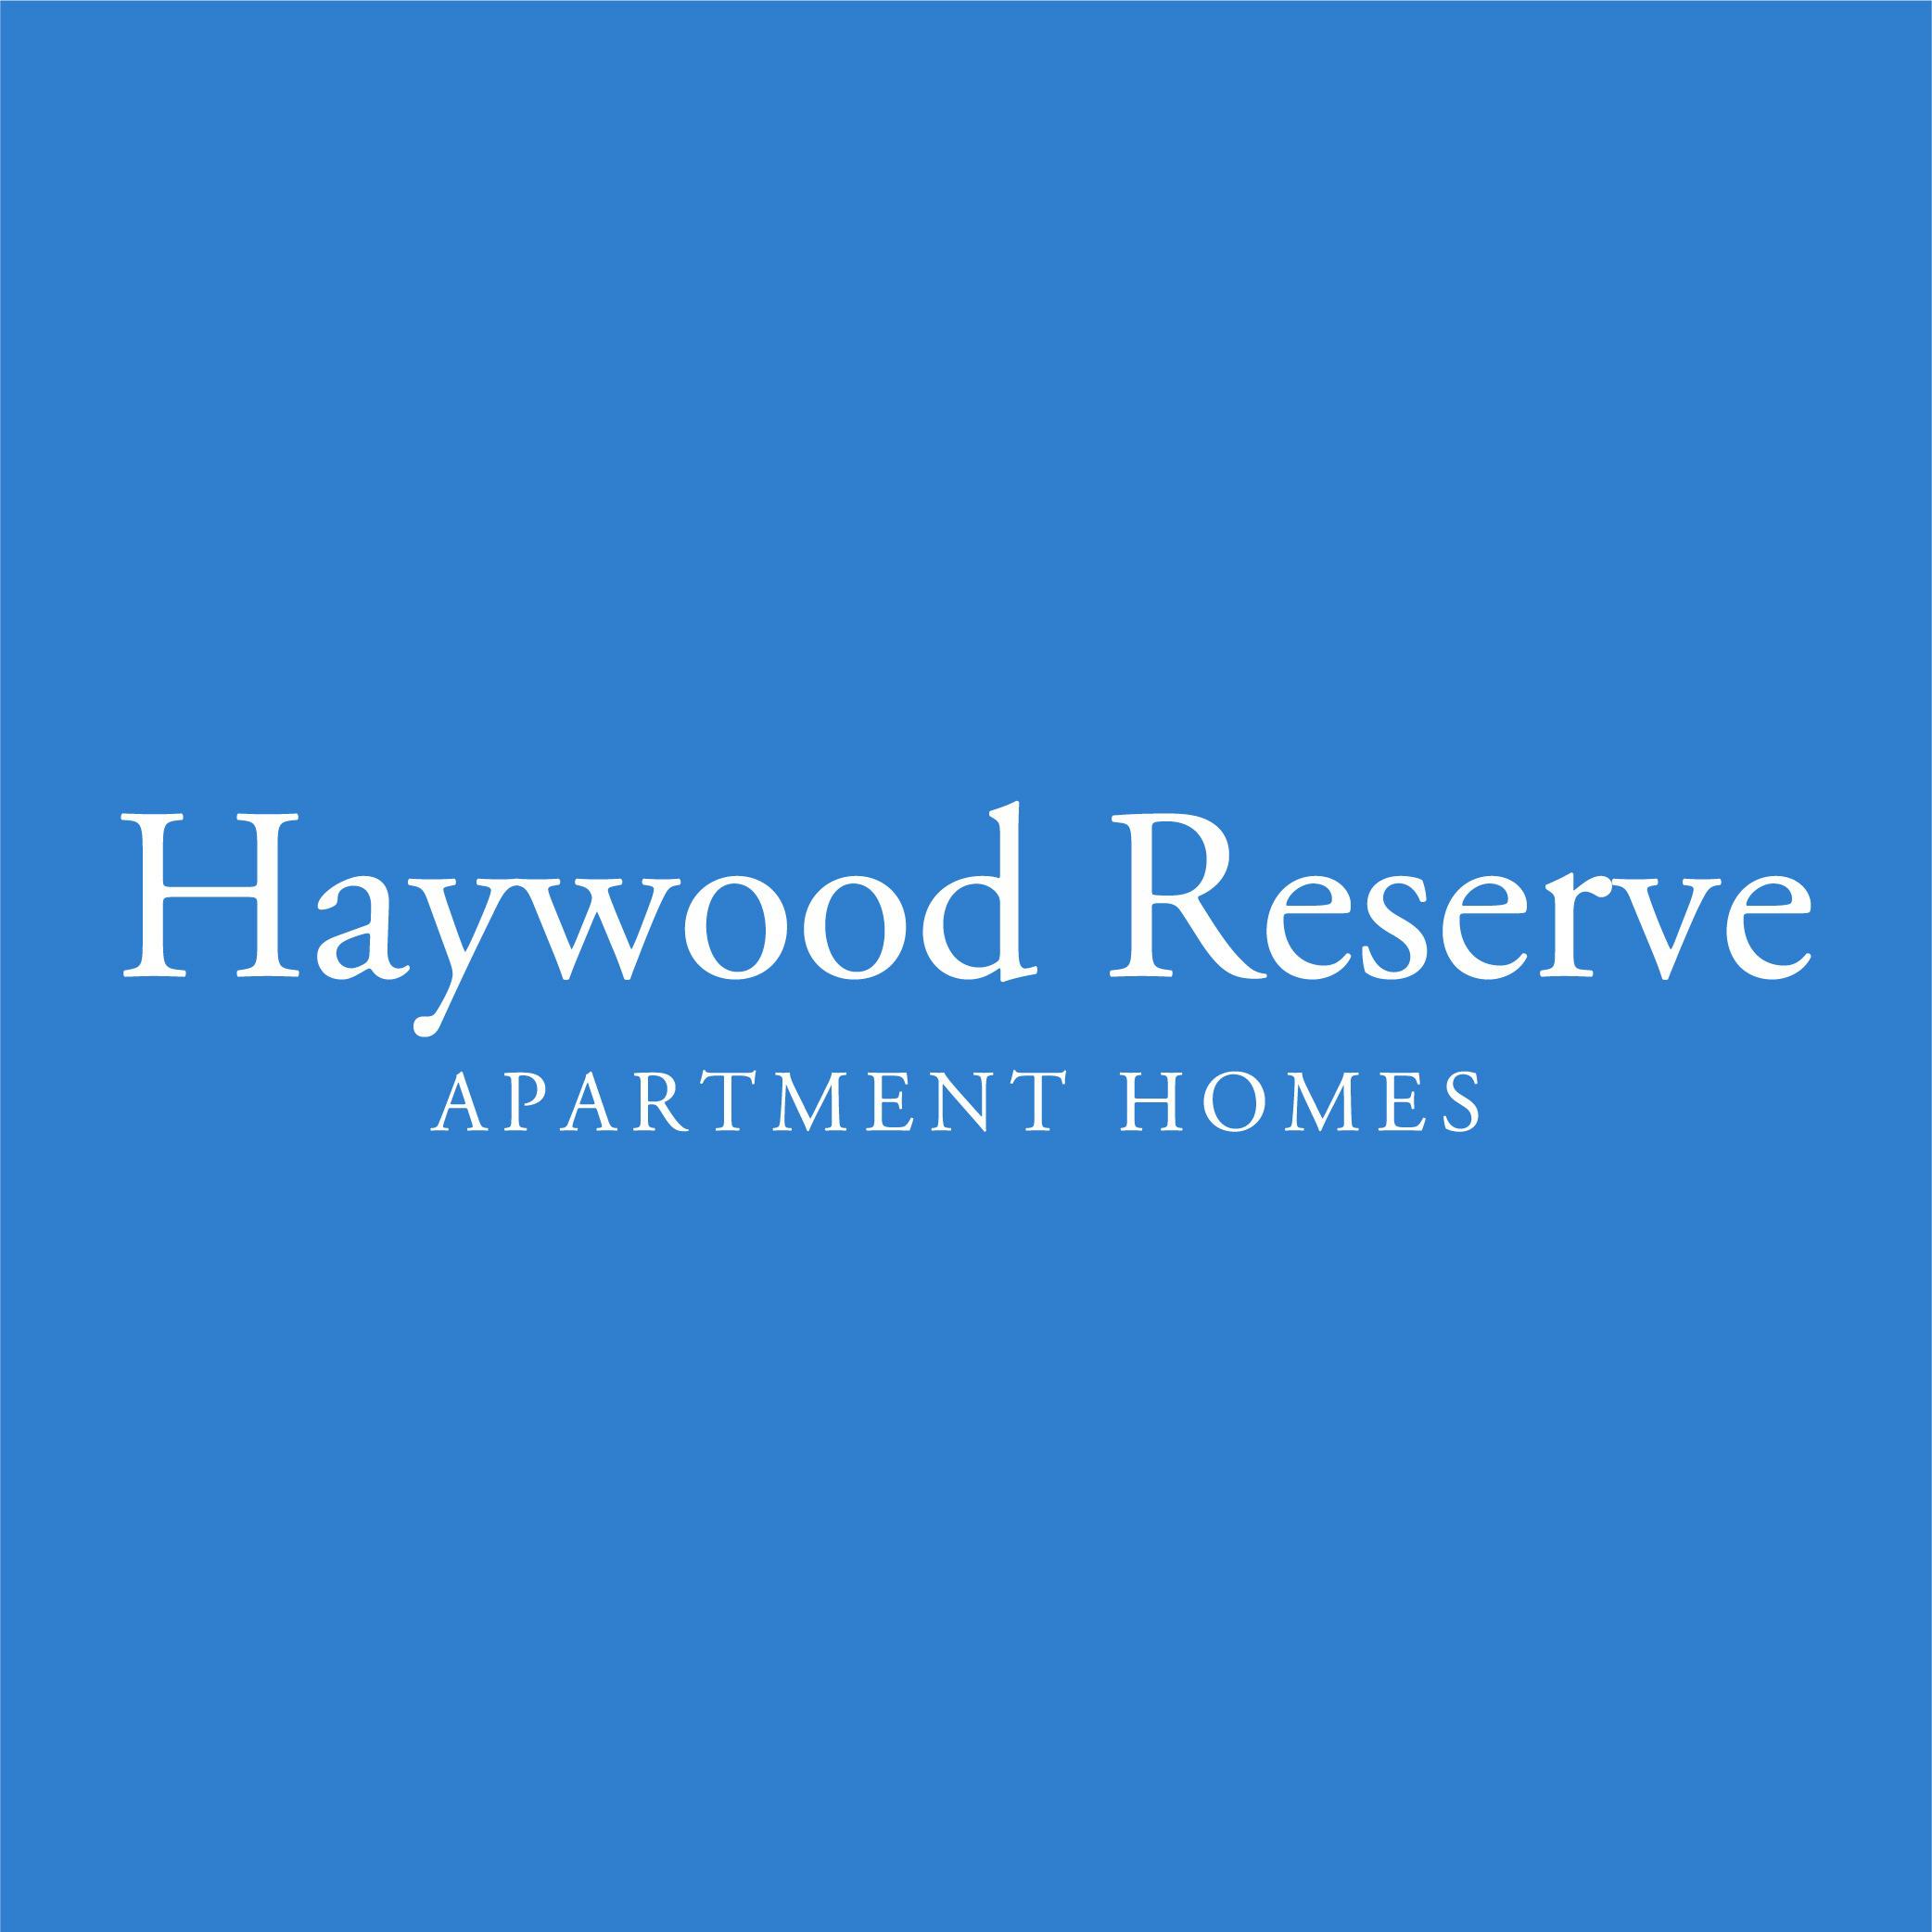 Haywood Reserve Apartment Homes